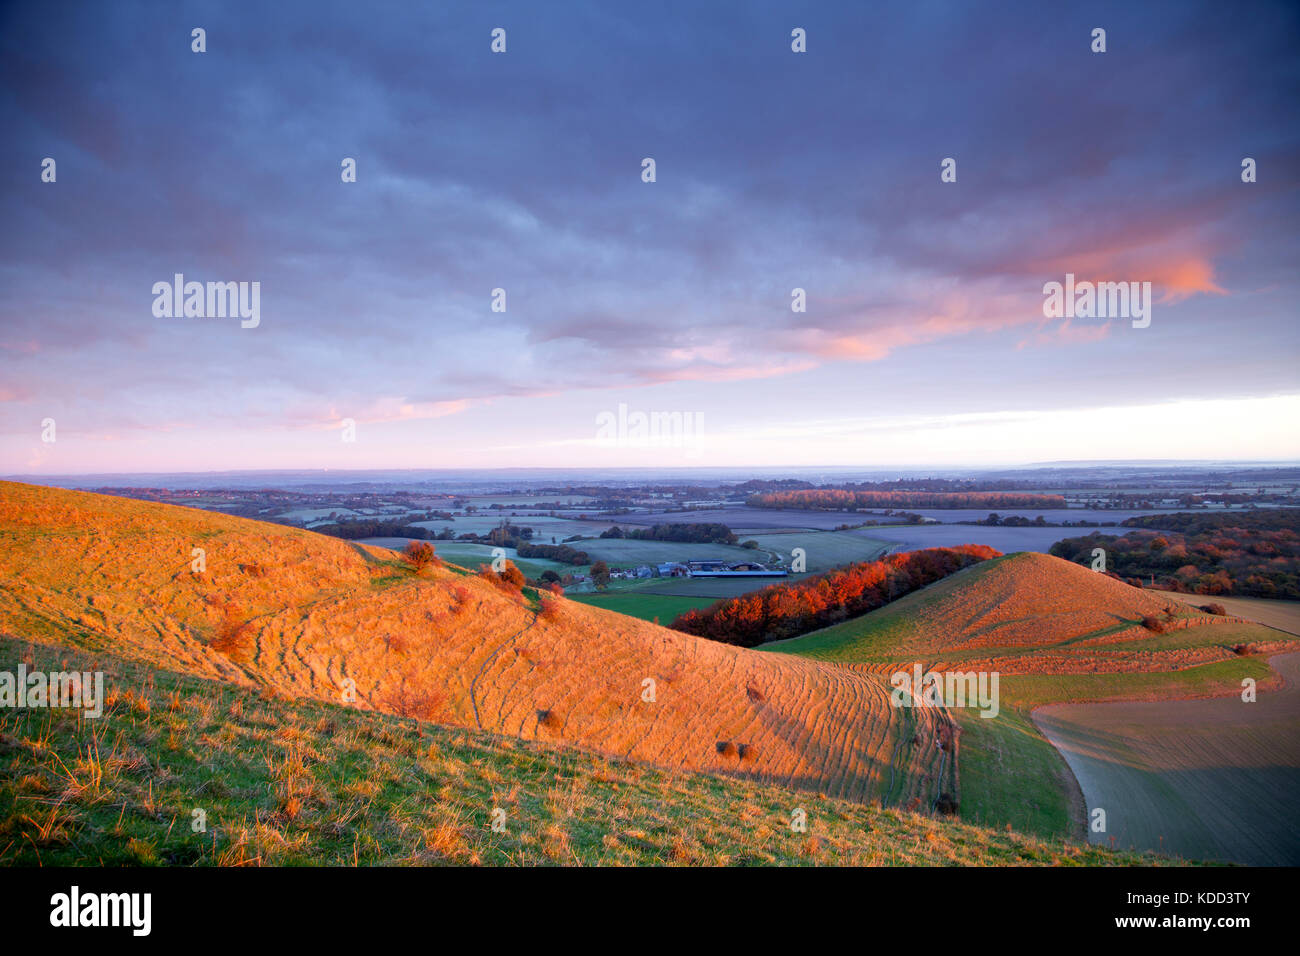 Cley Hügel in der Nähe Warminster in Wiltshire. Stockfoto